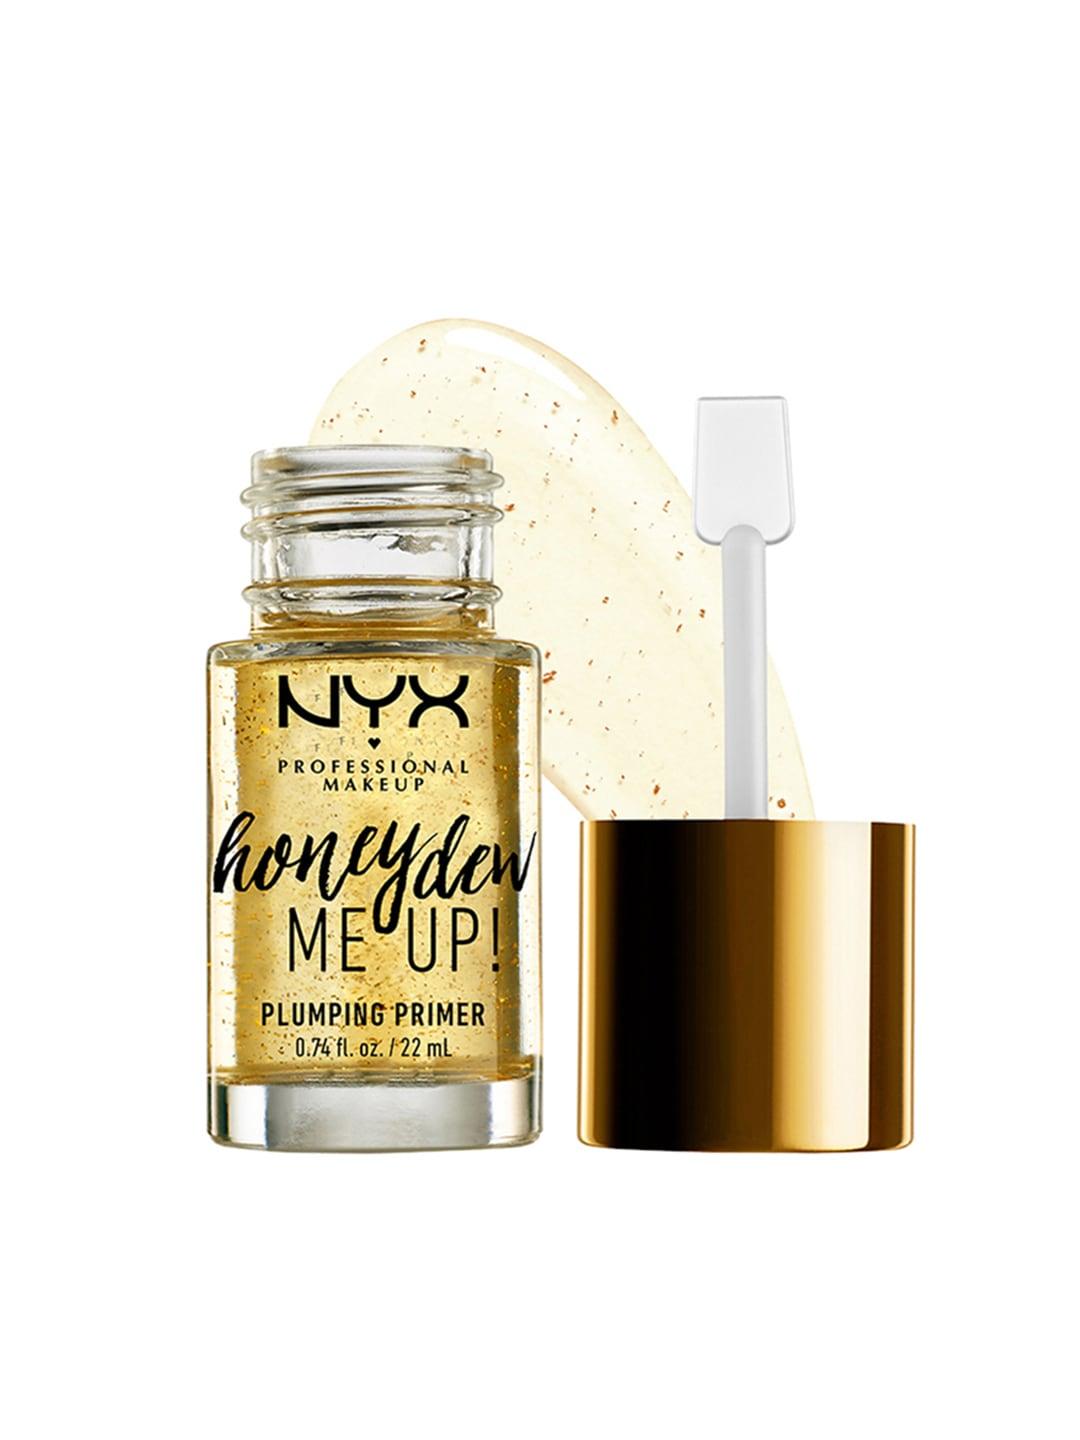 nyx-professional-makeup-honey-dew-me-up-plumping-primer---22-ml